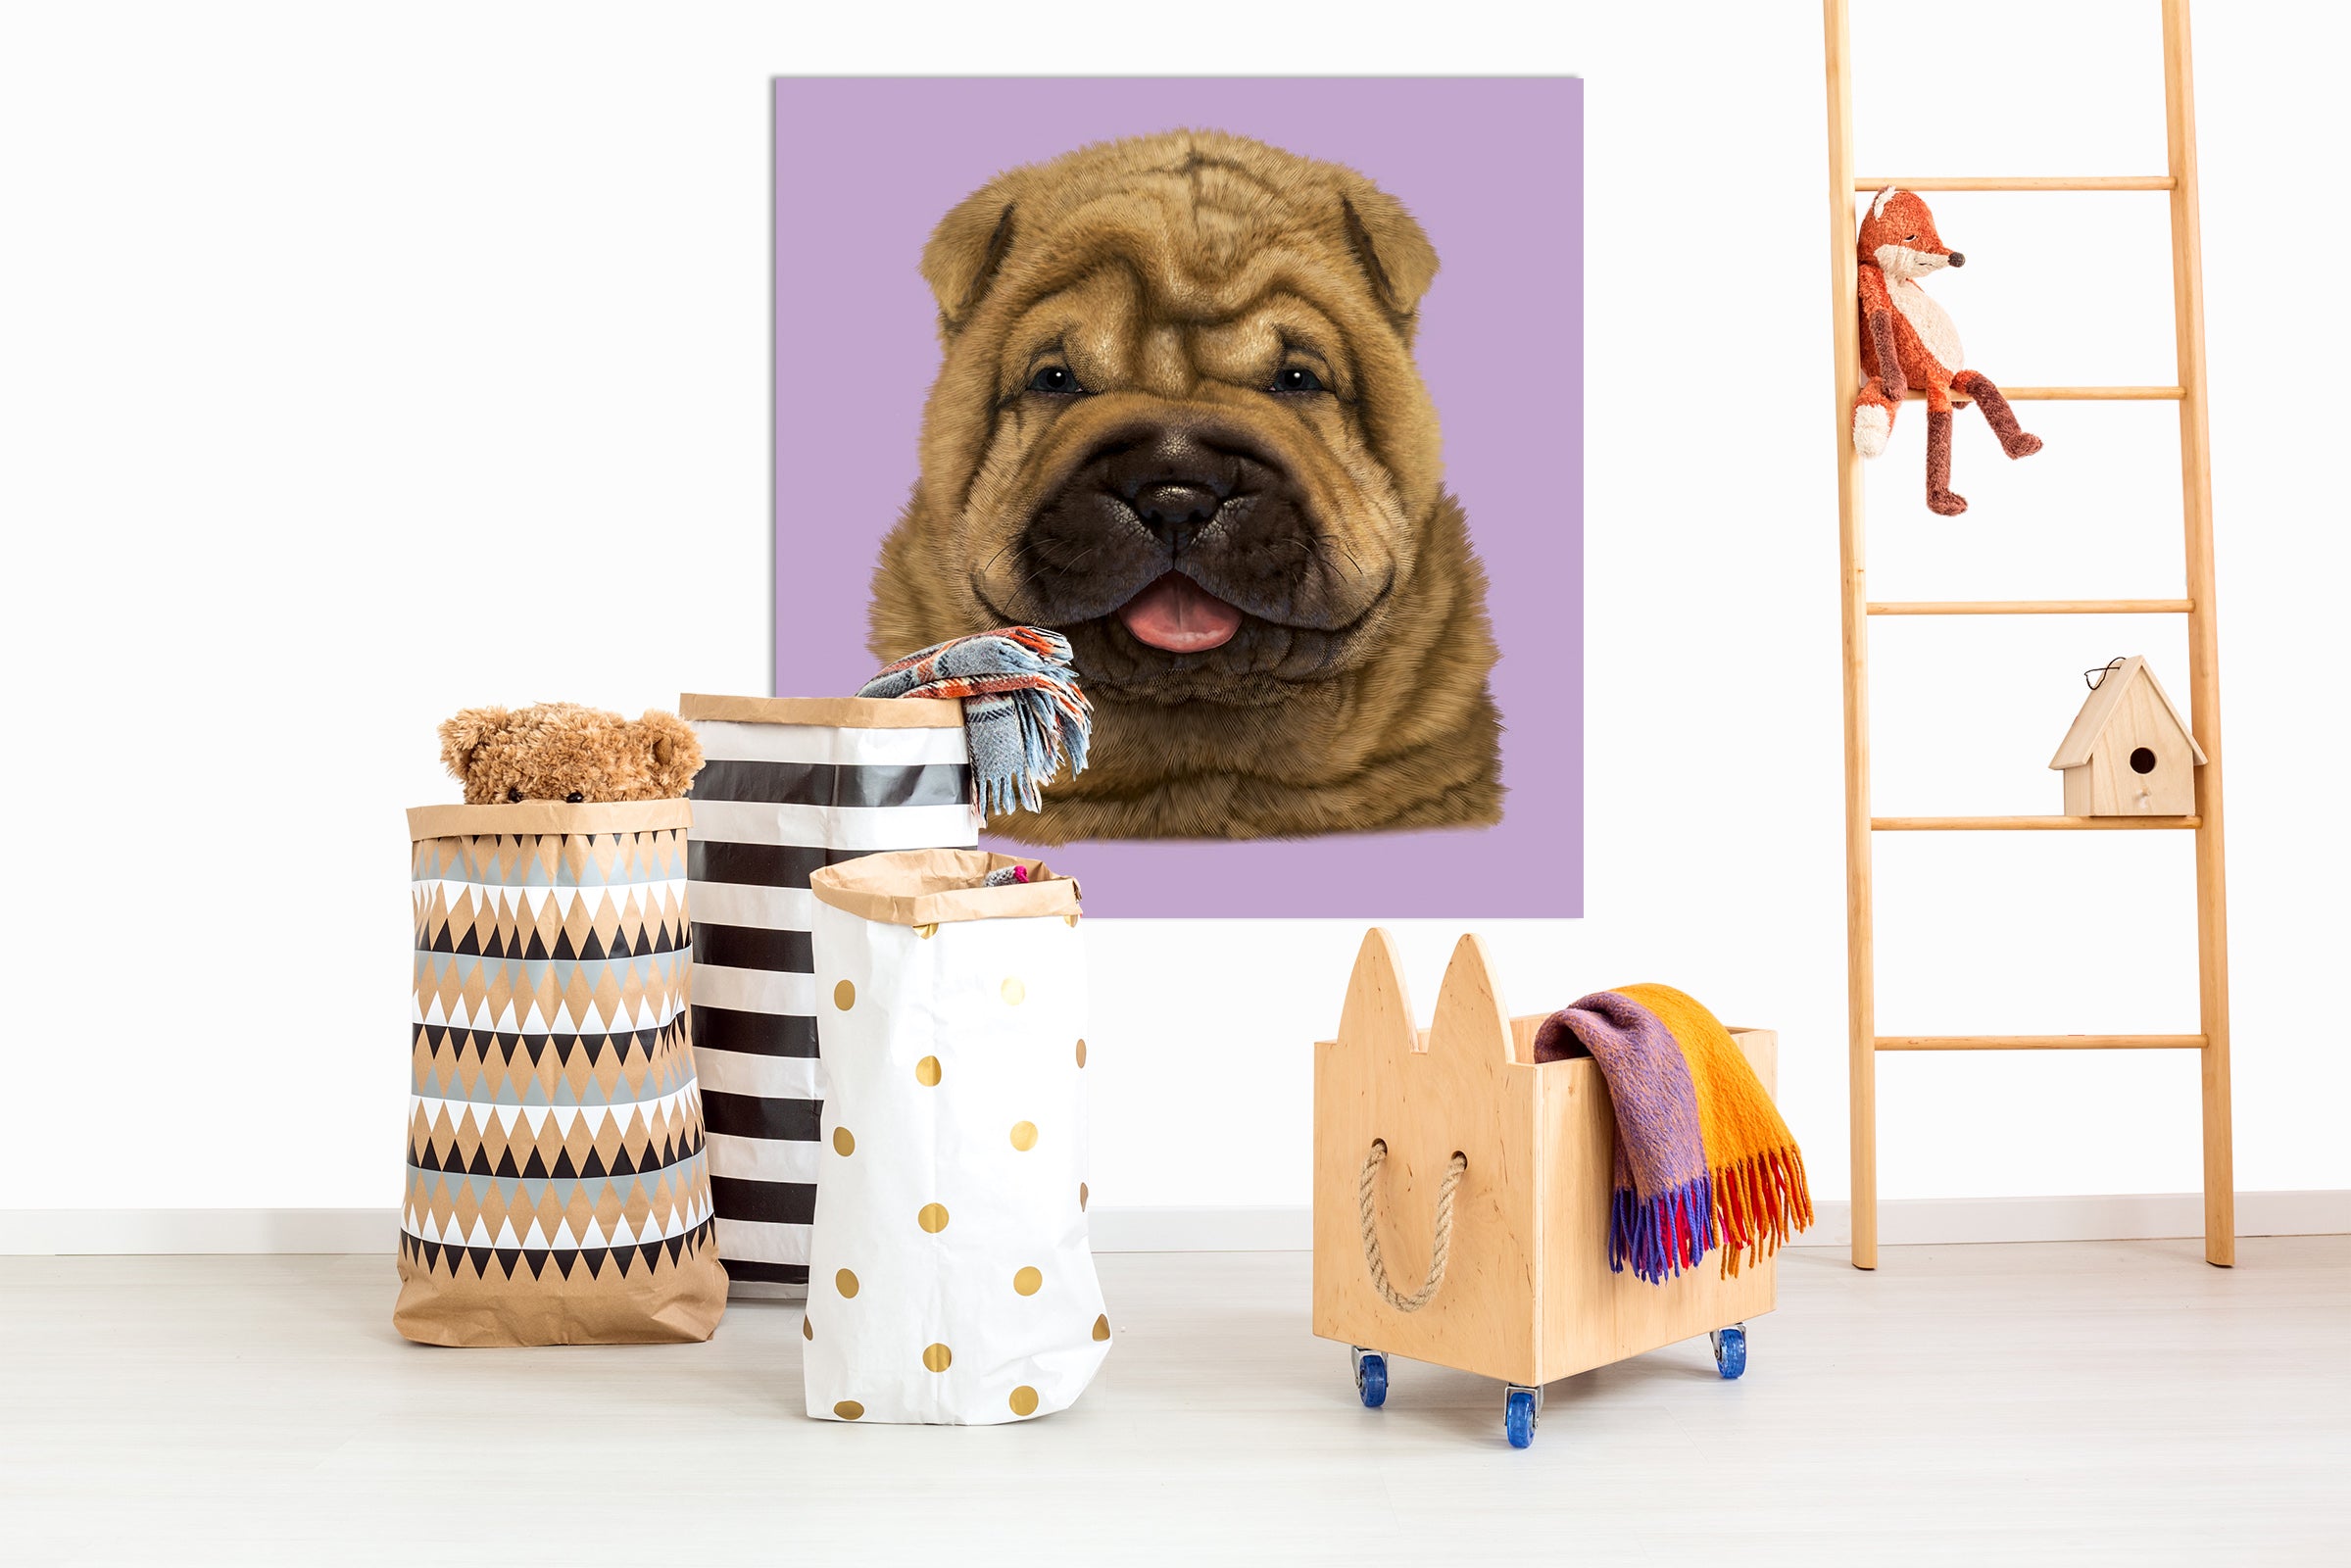 3D Shar Pei Puppy Portrait 069 Vincent Hie Wall Sticker